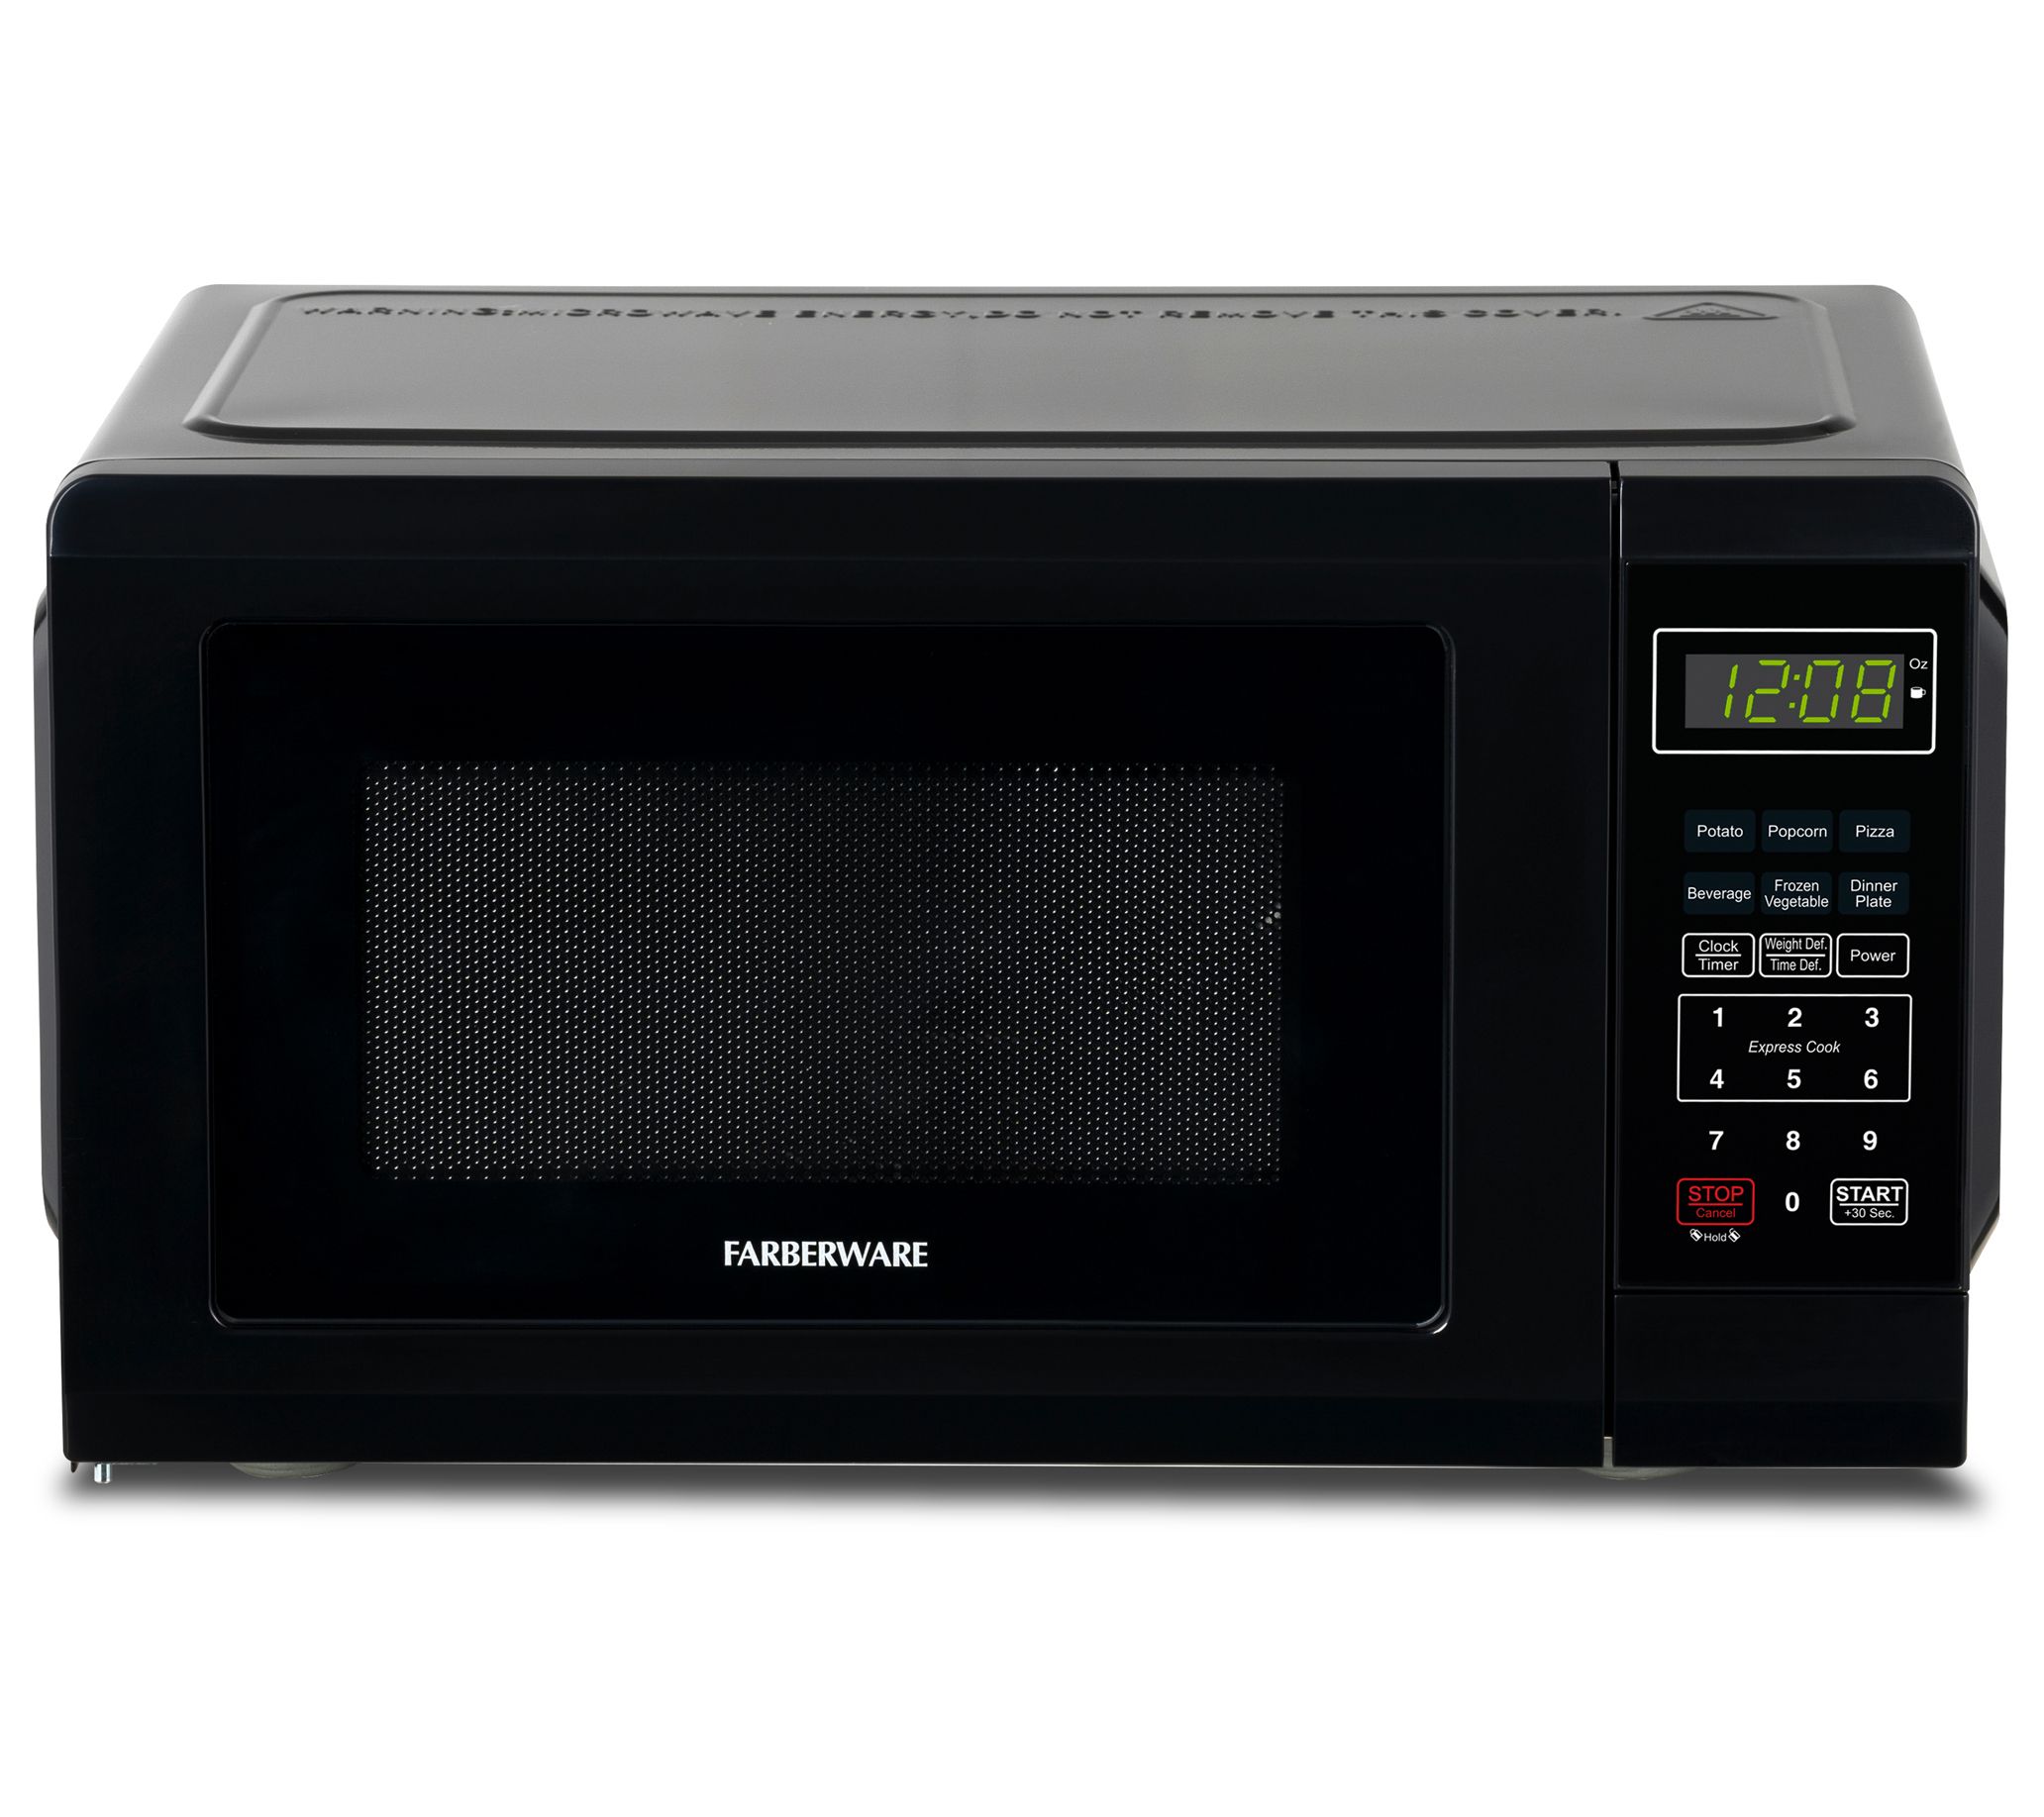 Farberware Microwave Oven - 1 oven